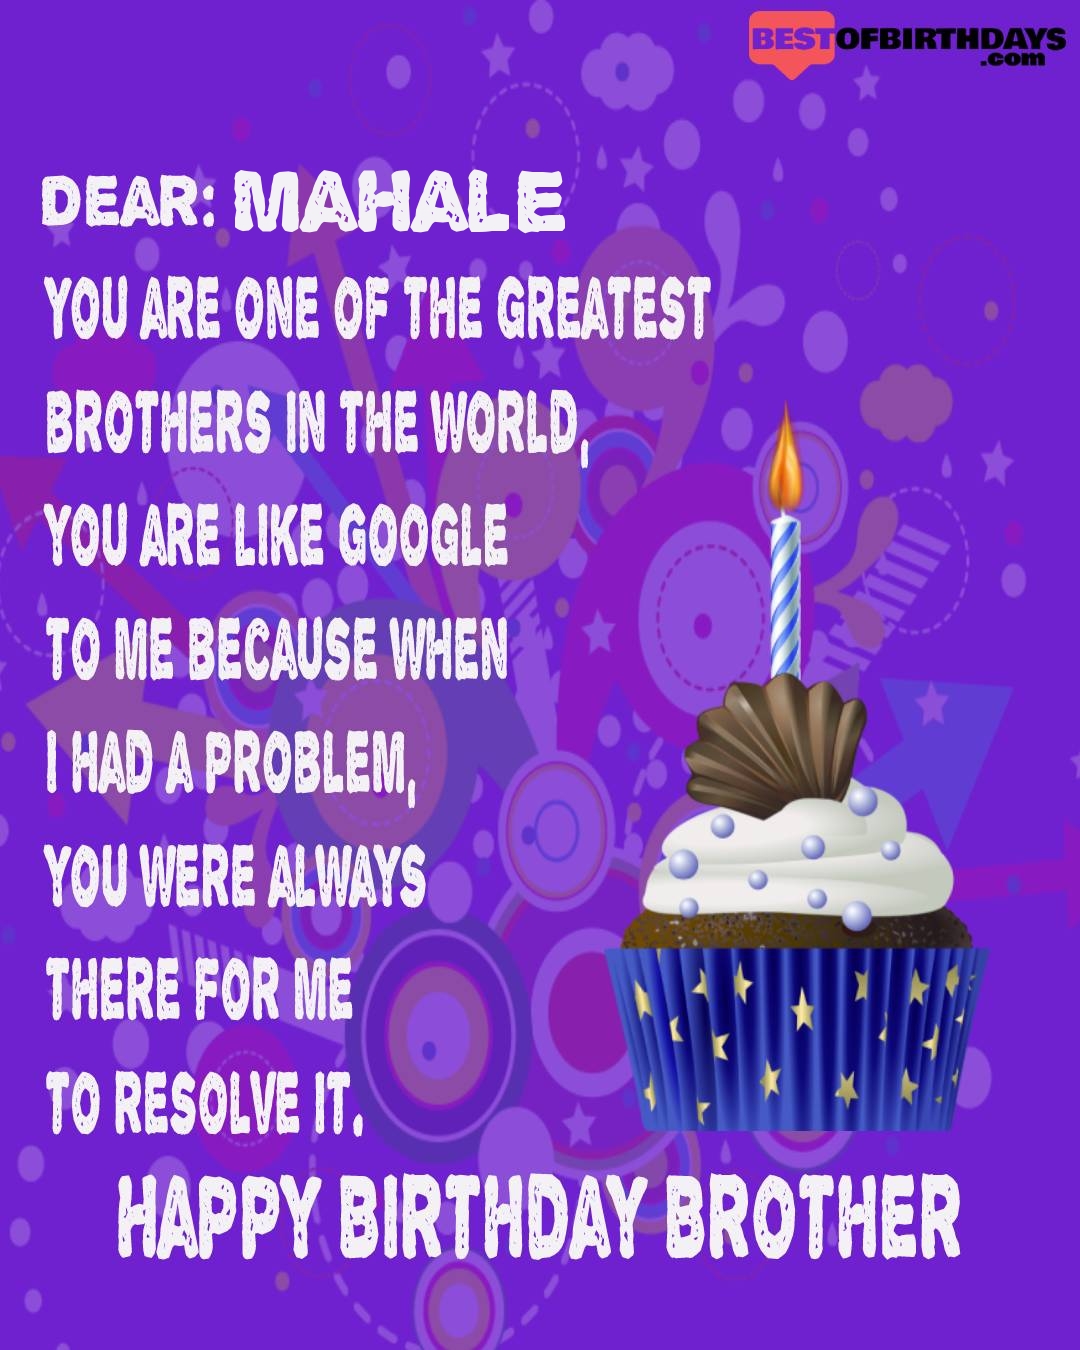 Happy birthday mahale bhai brother bro